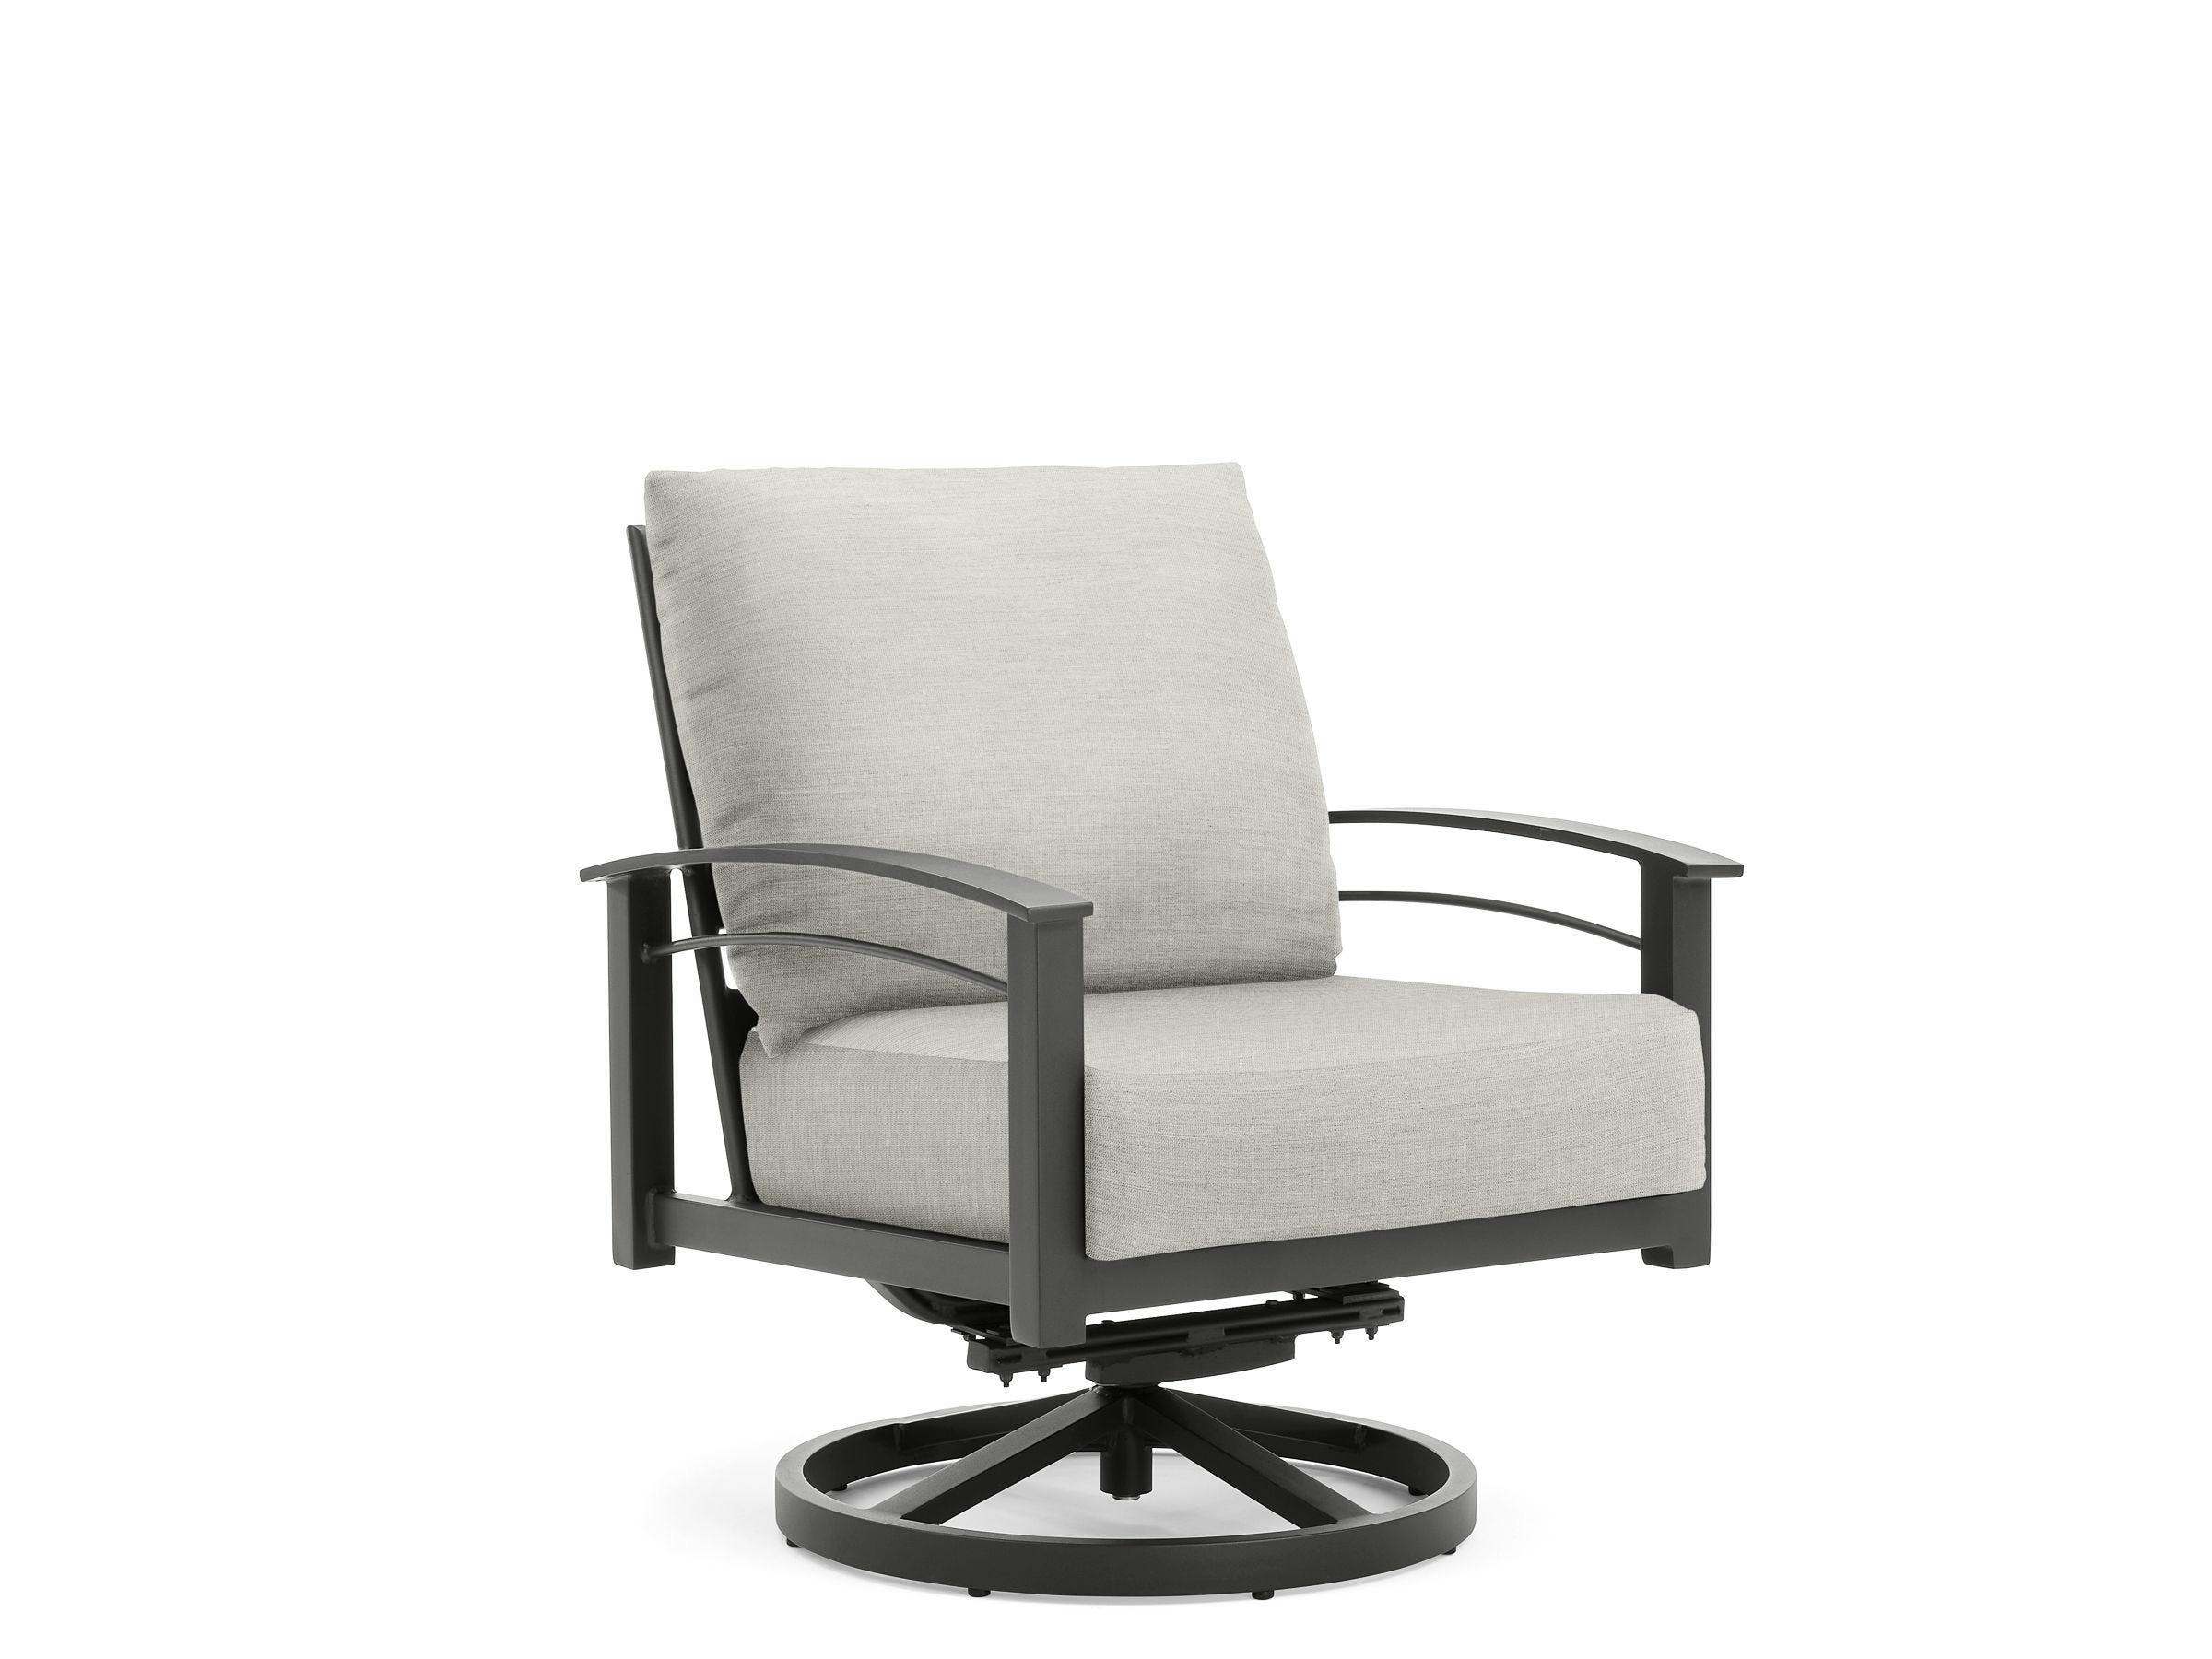 Stanford Cushion Swivel Rocker Lounge Chair   